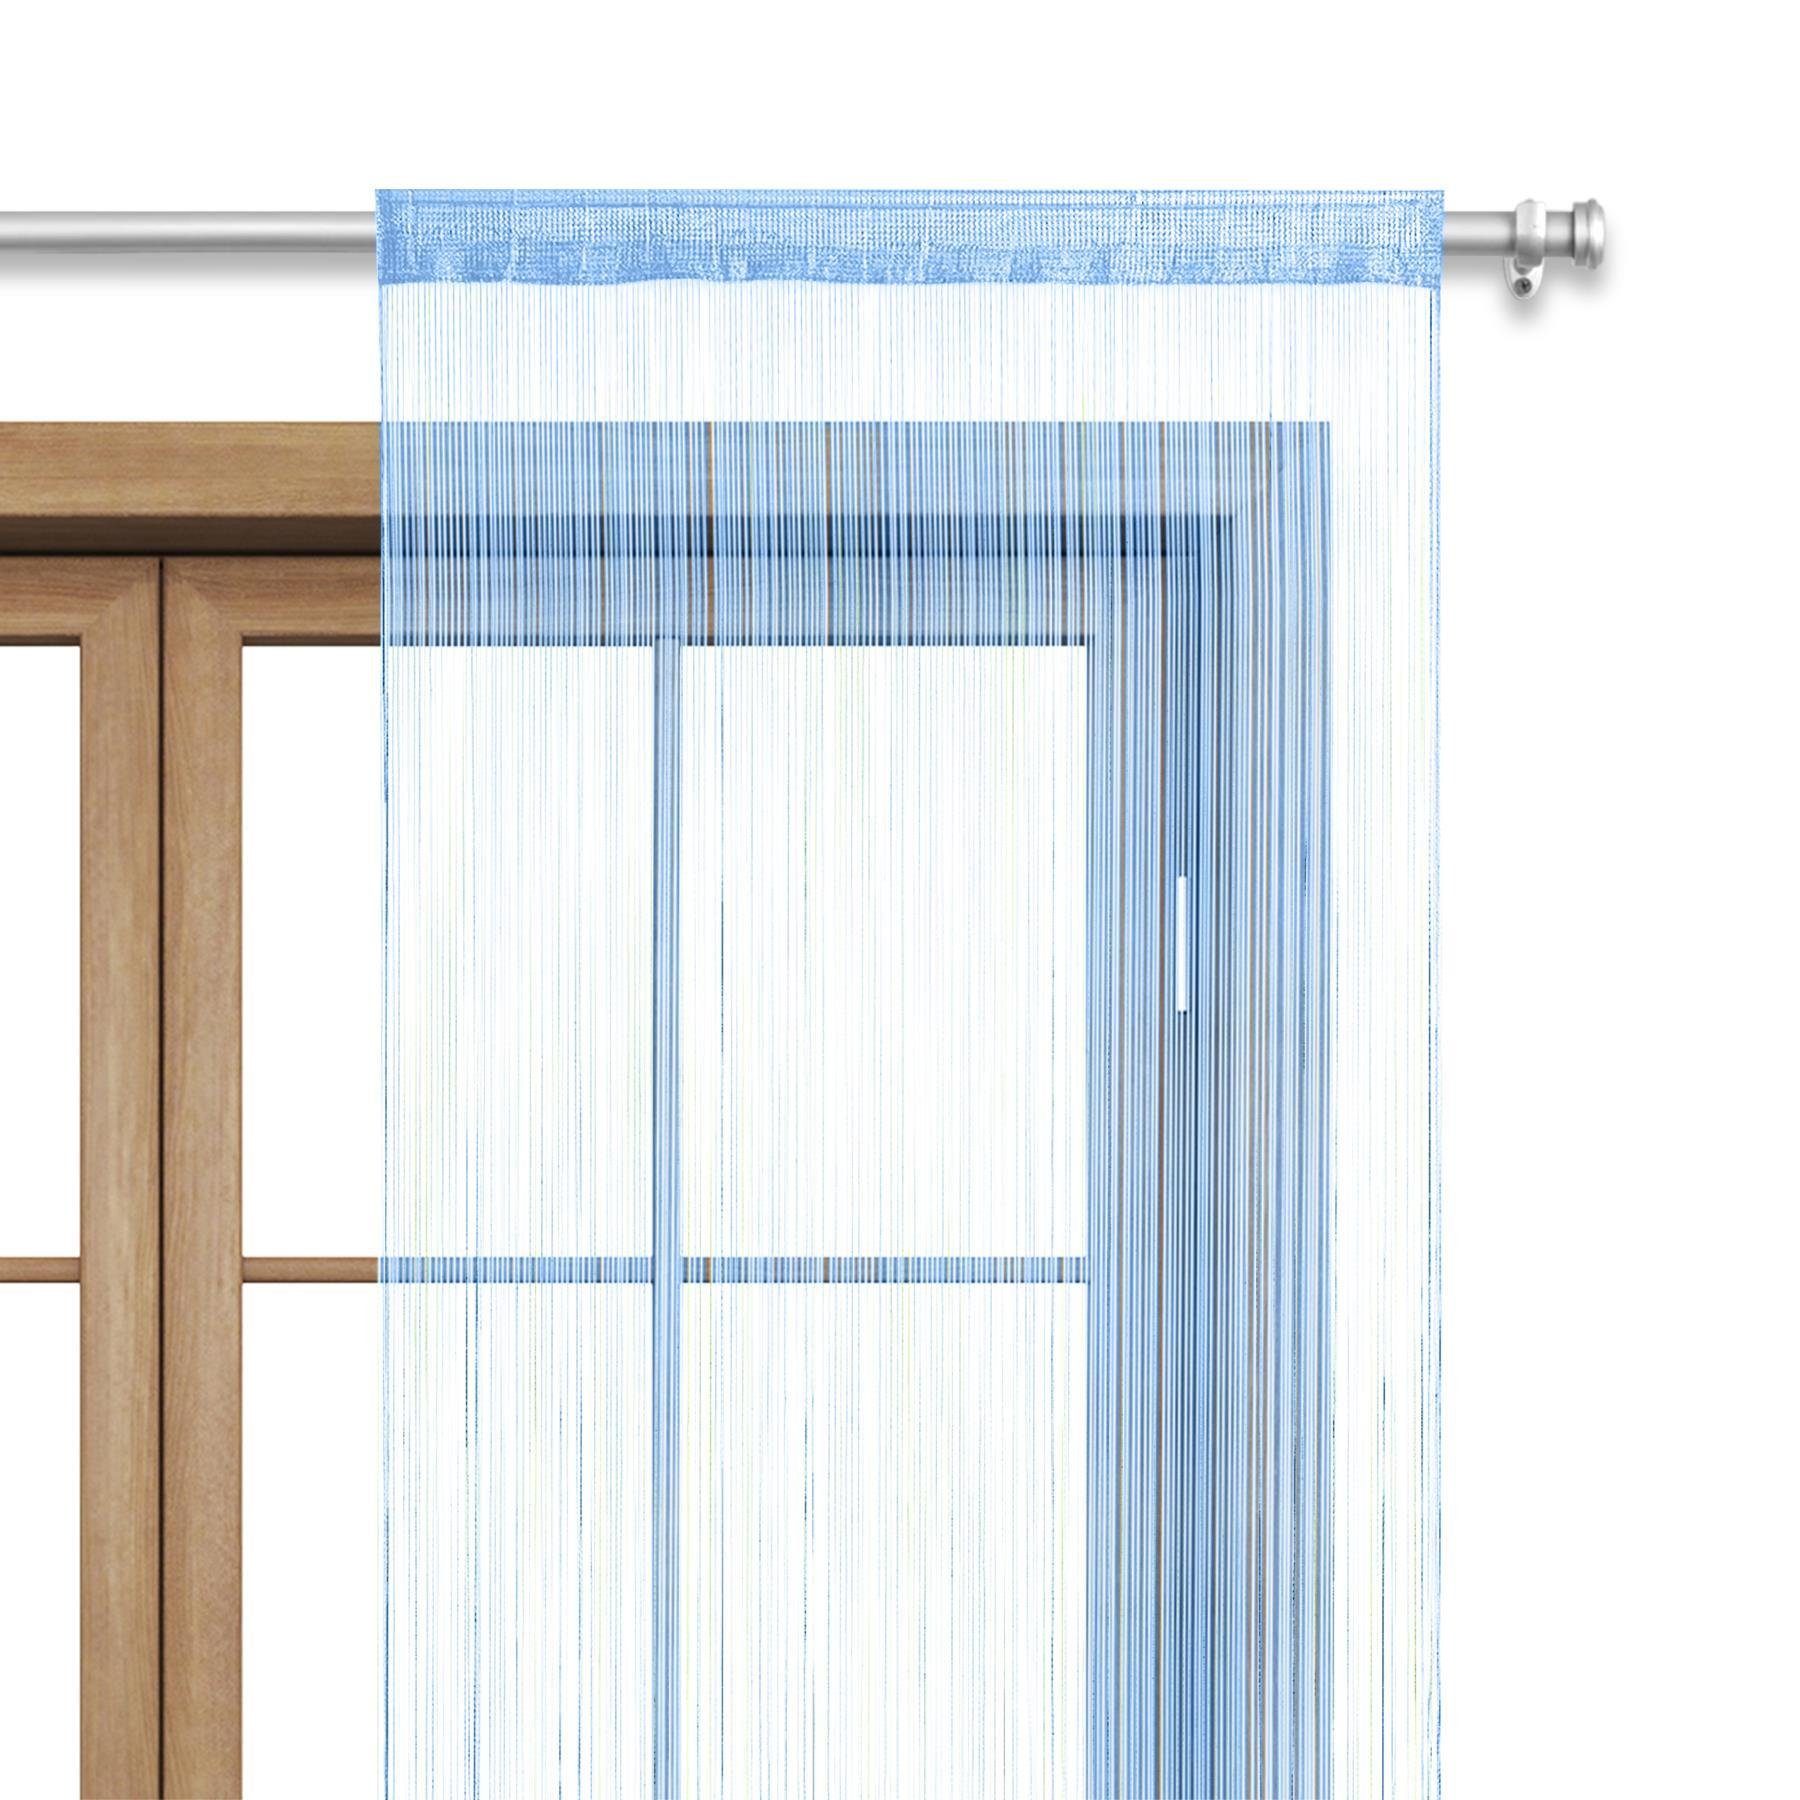 Fadenvorhang One, wometo, Stangendurchzug (1 St), halbtransparent, 100%  Polyester, Fadengardine, kürzbar